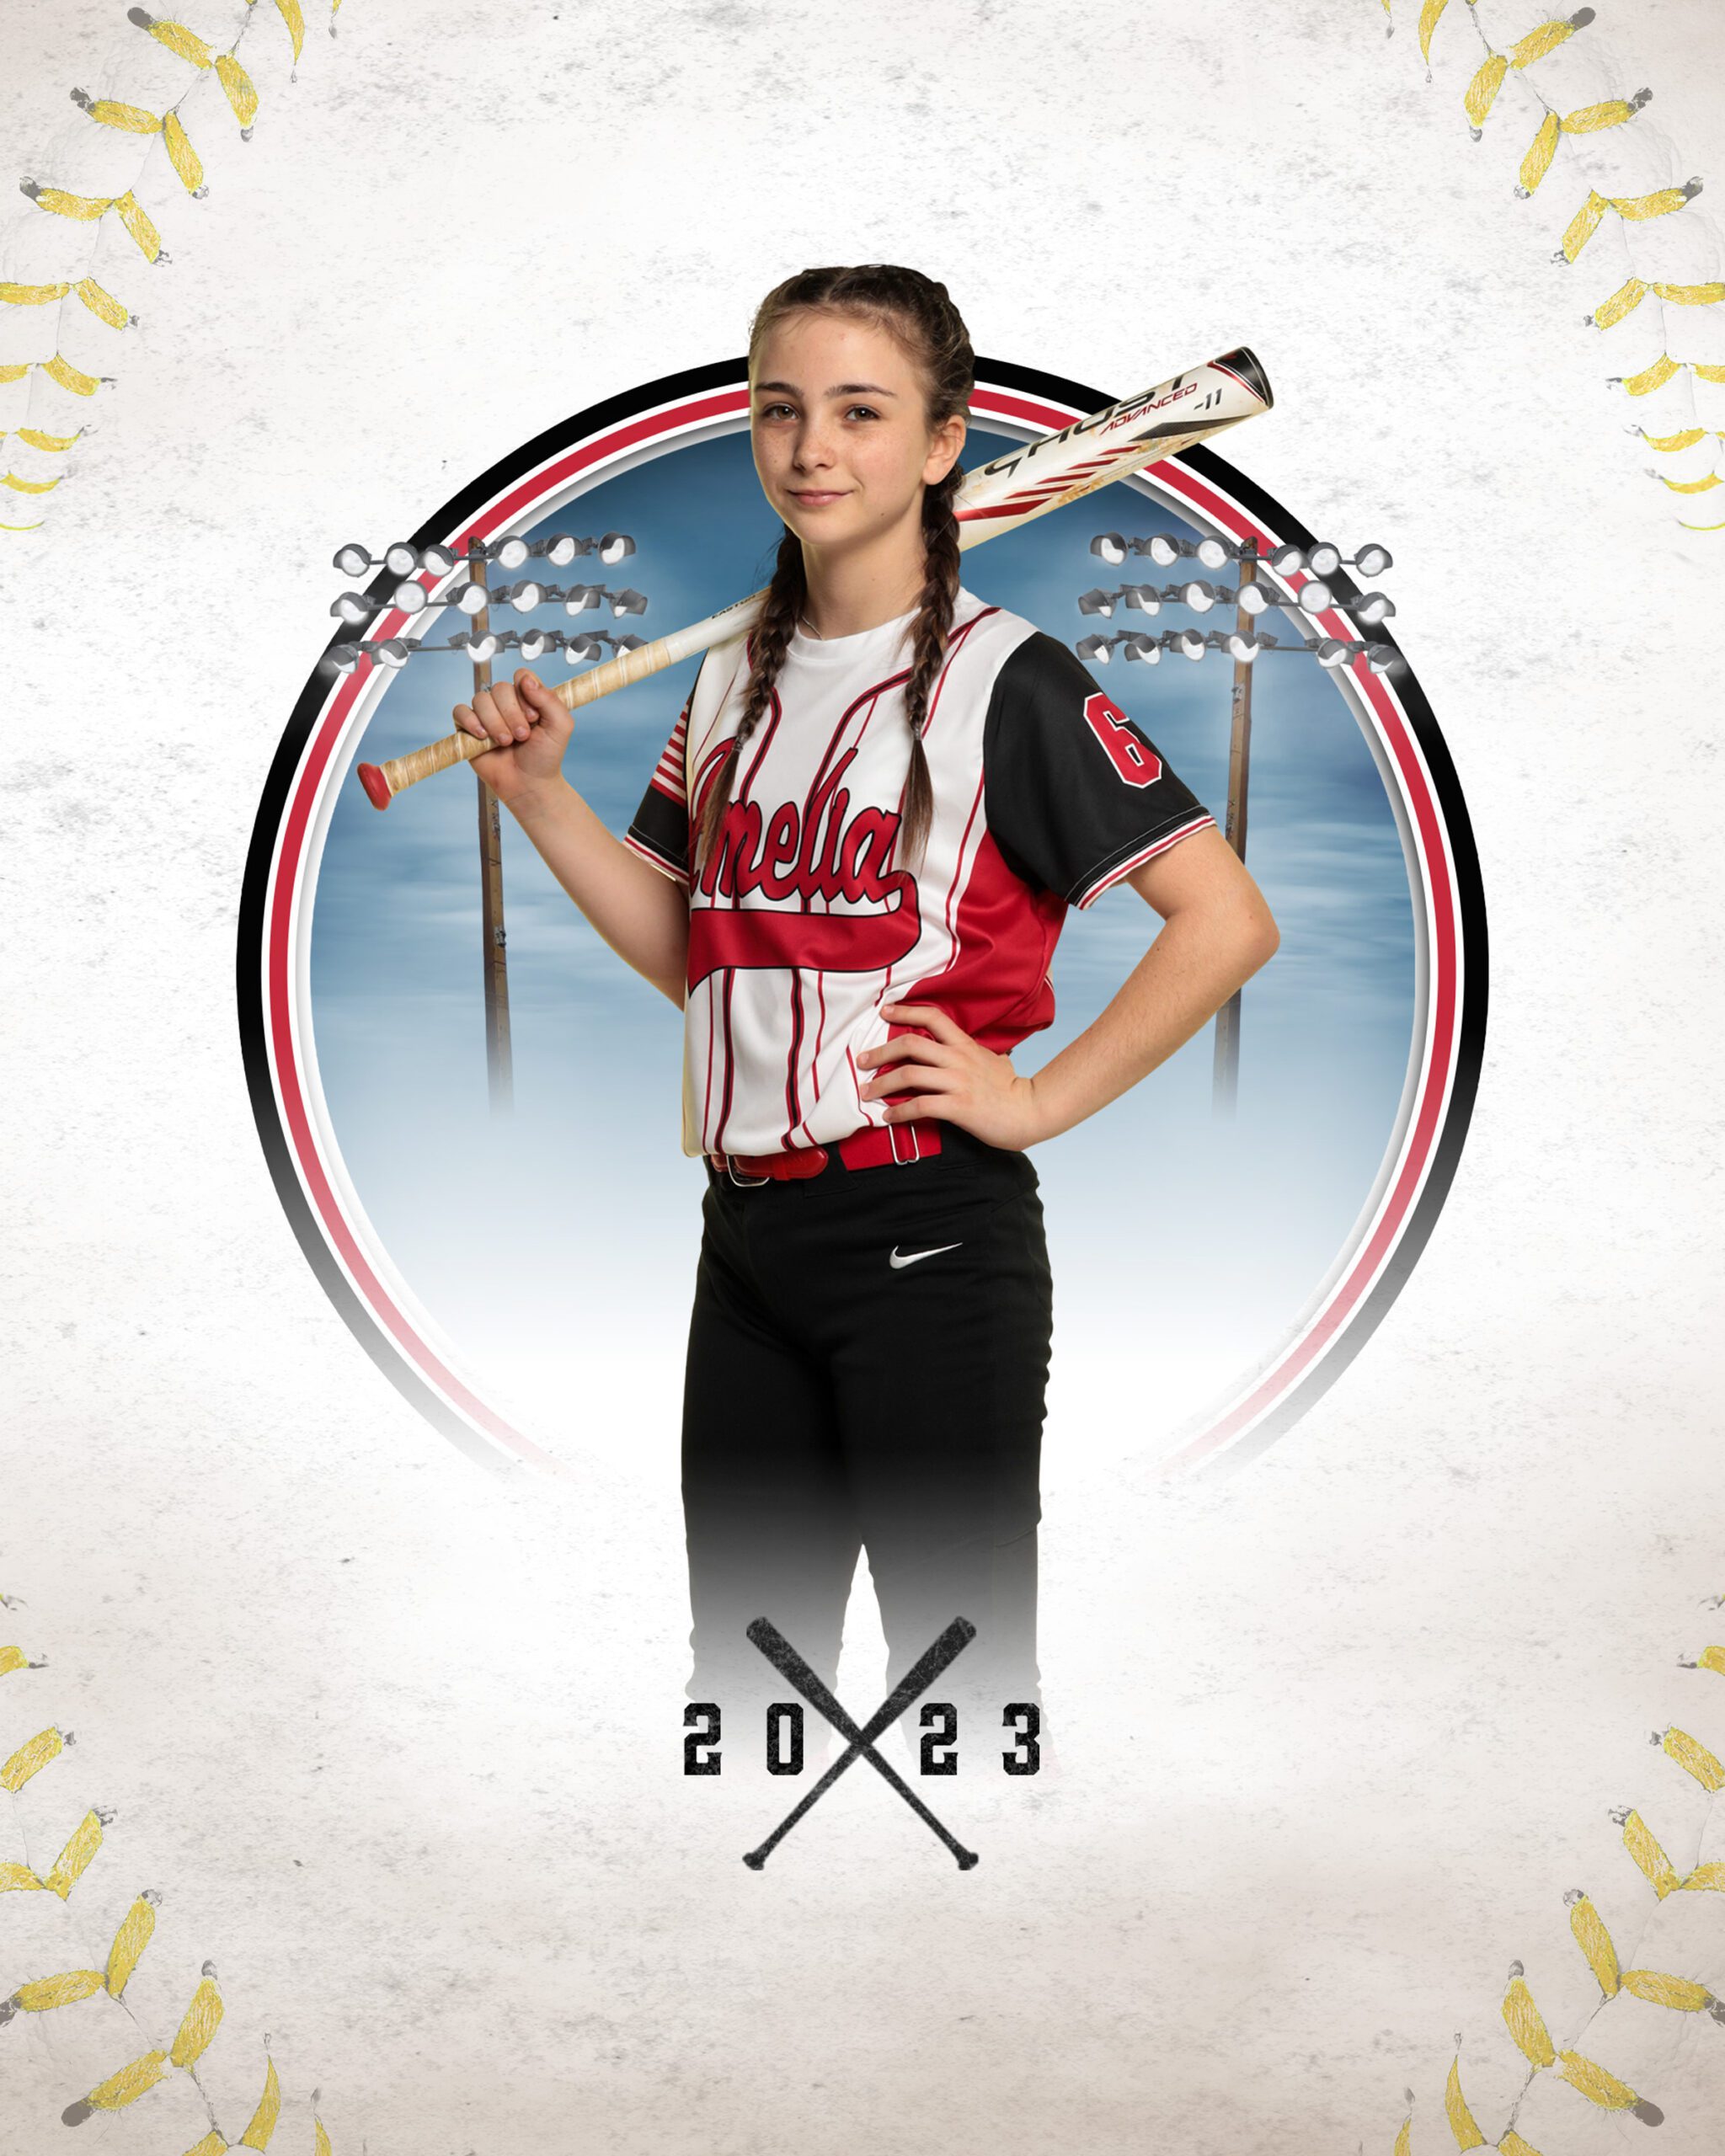 Middle school girl in softball uniform holding a bat over her shoulder